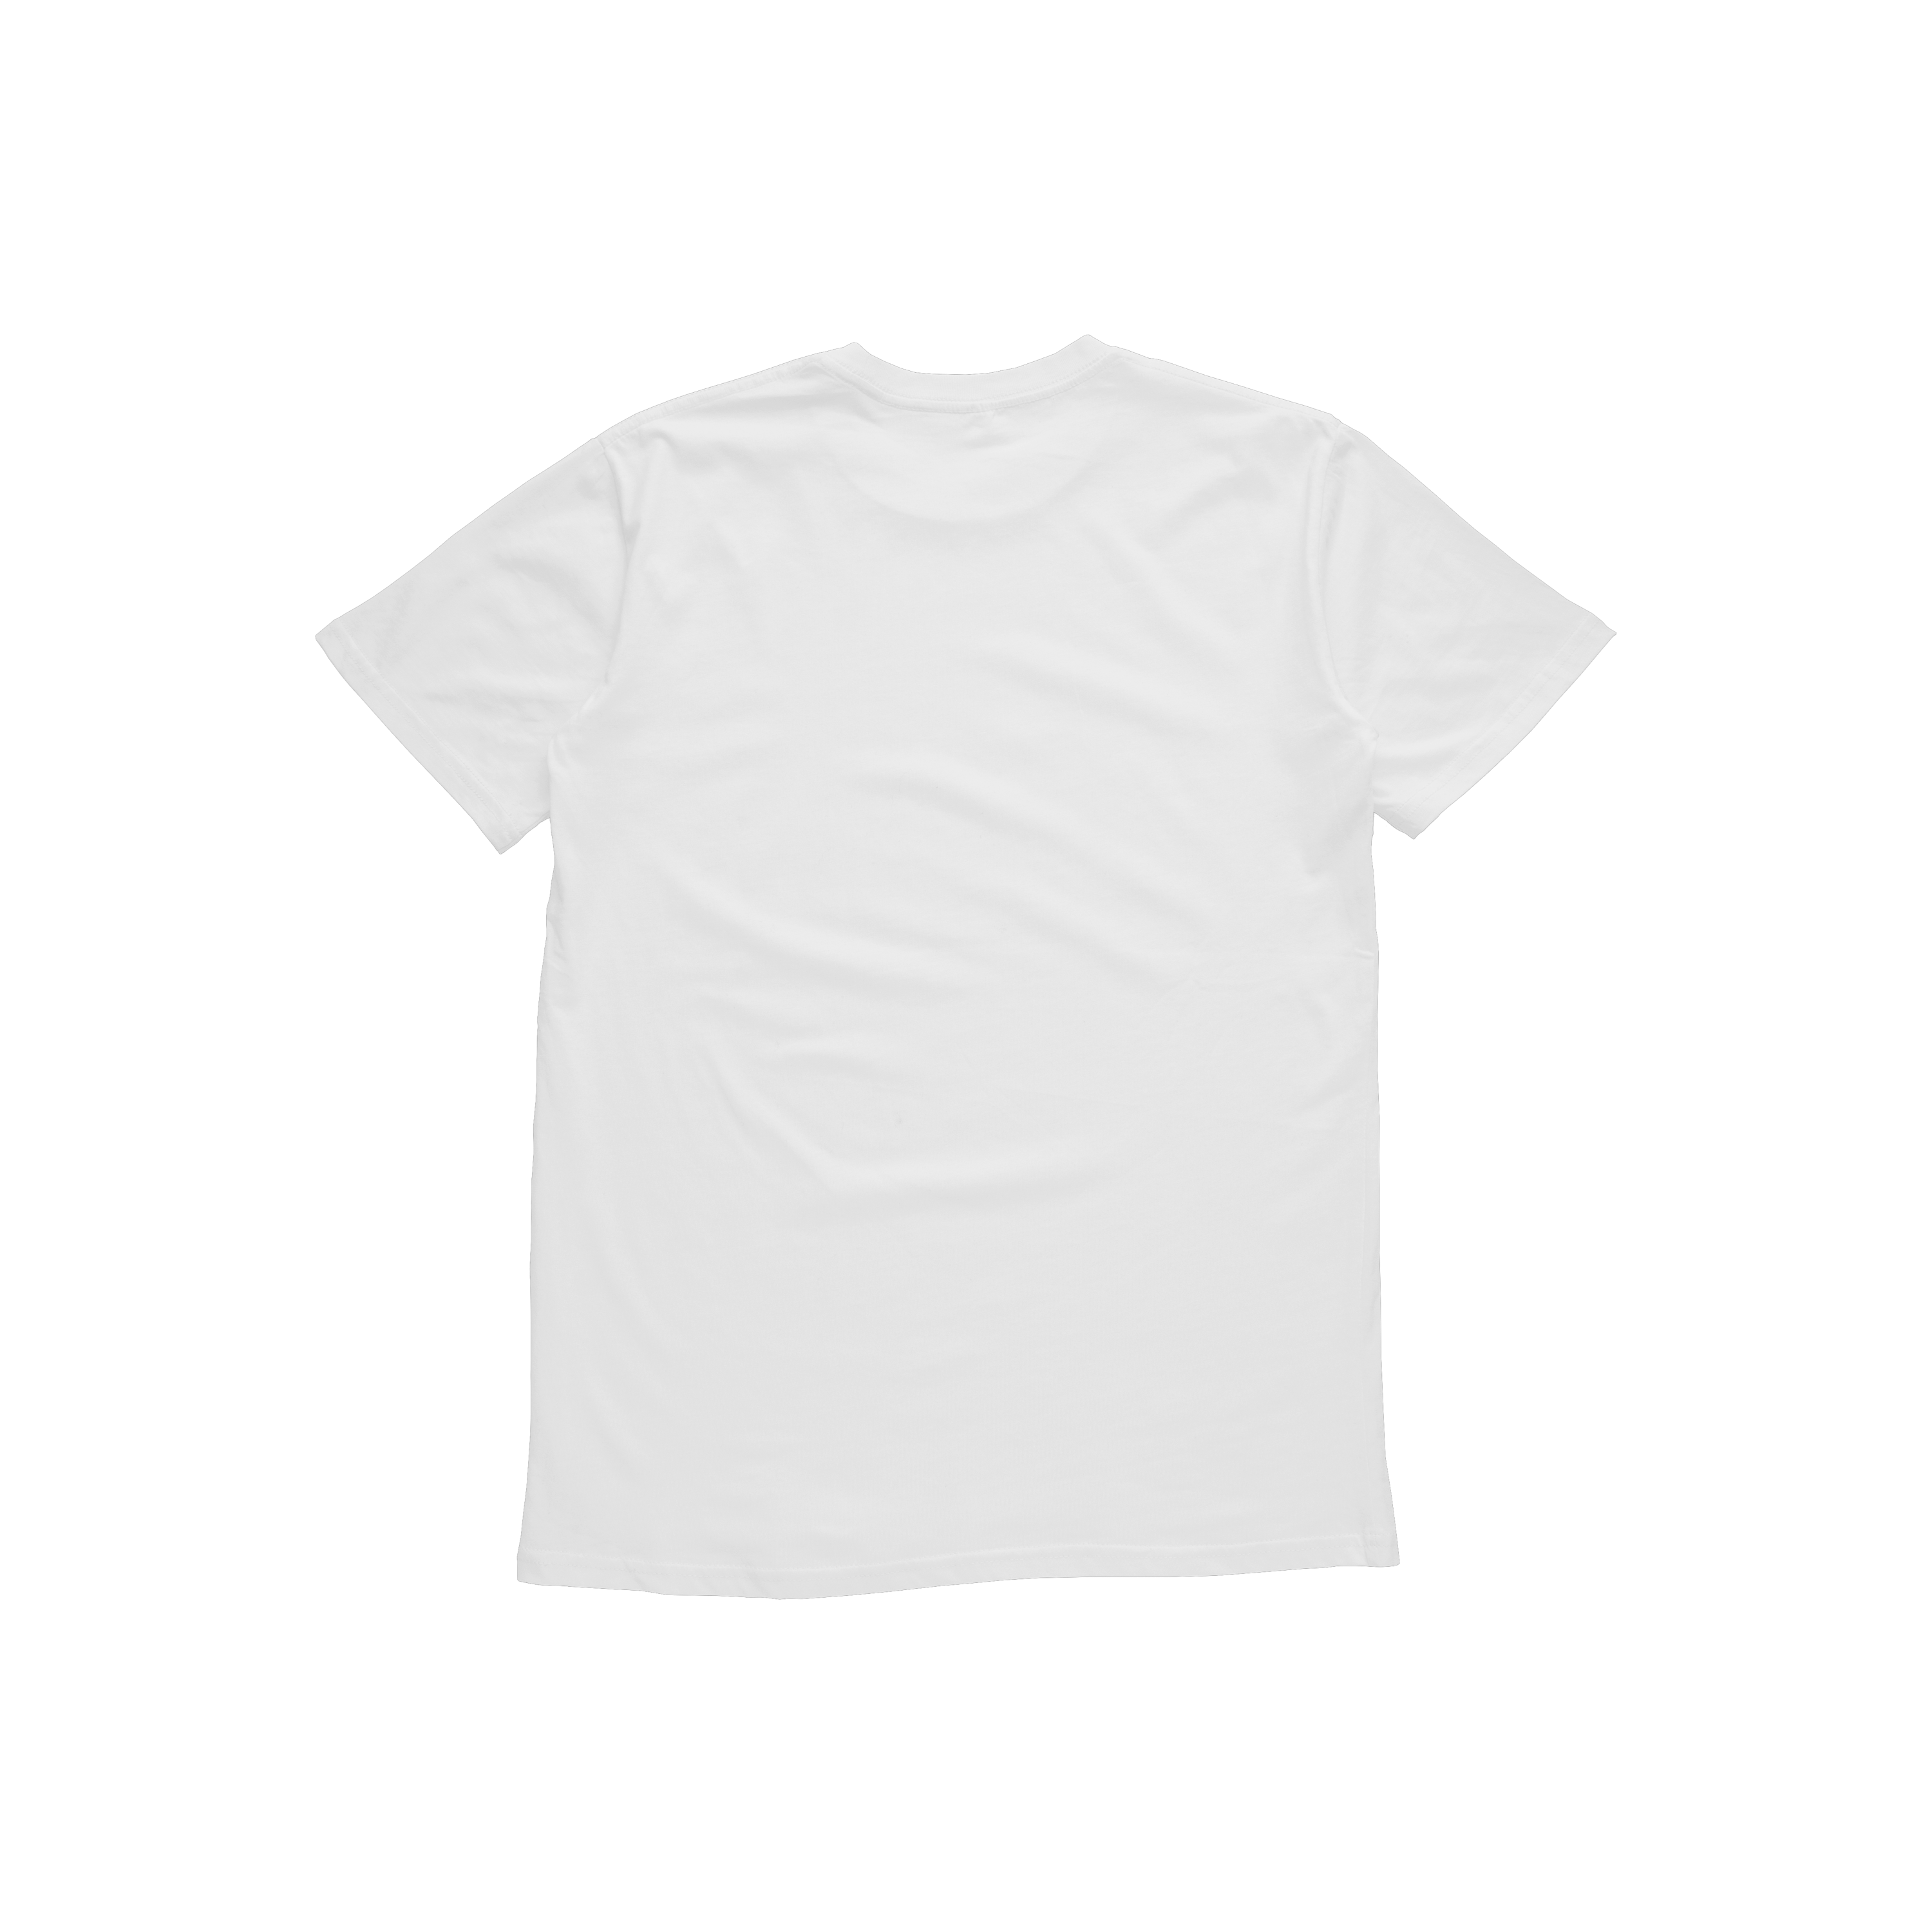 Pocket T-Shirt 002 Mockup